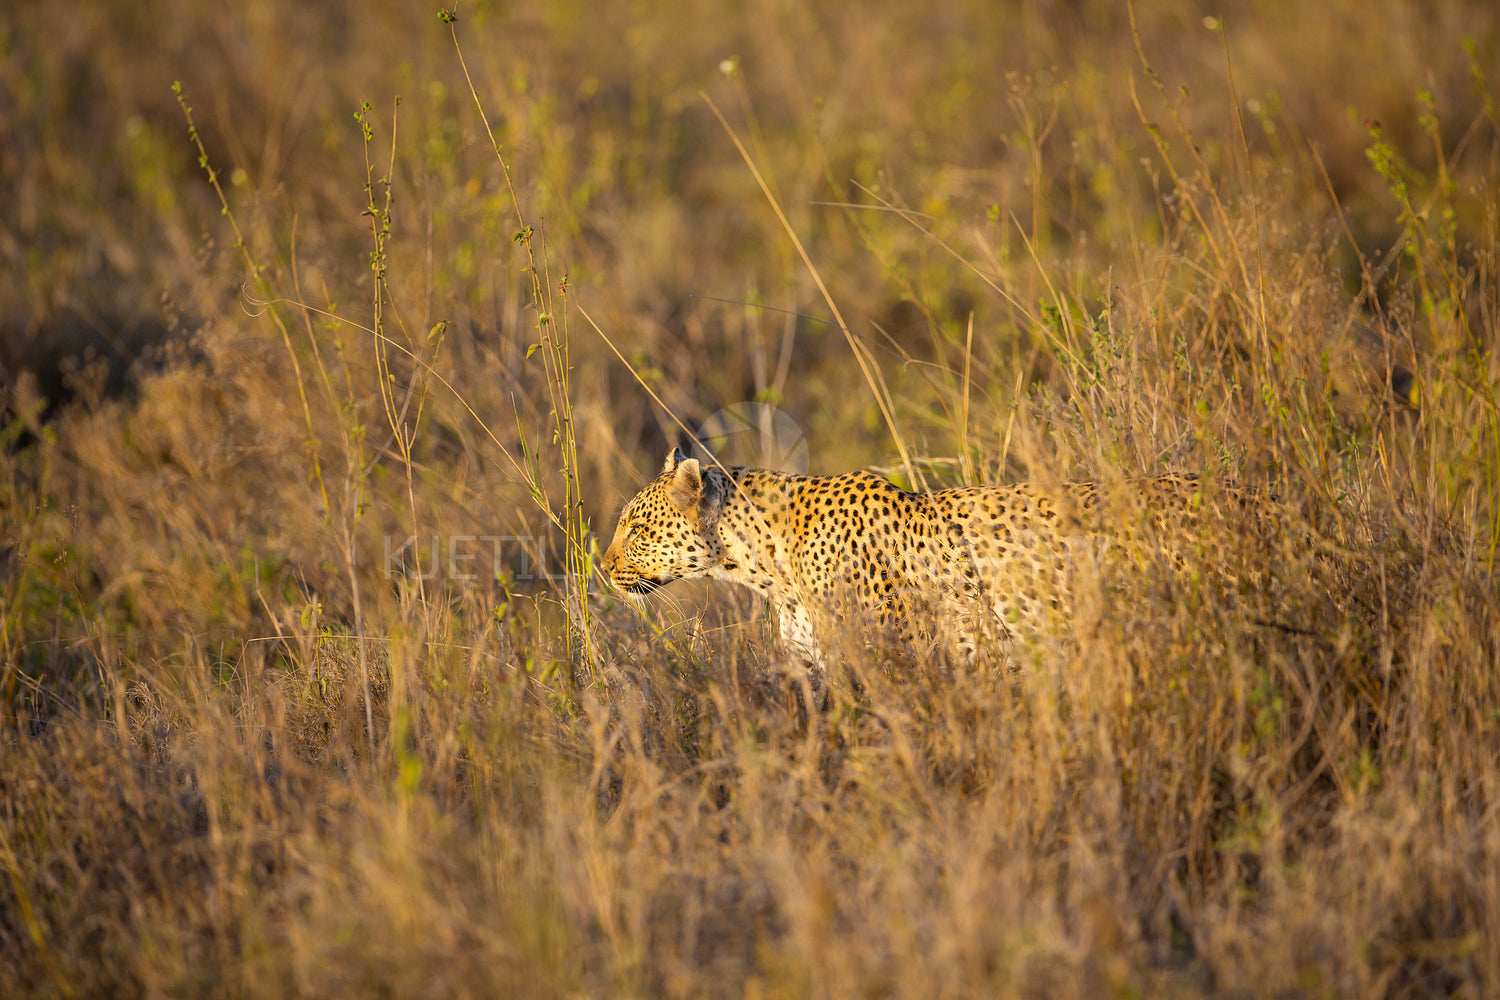 Leopard hunting in Serengeti